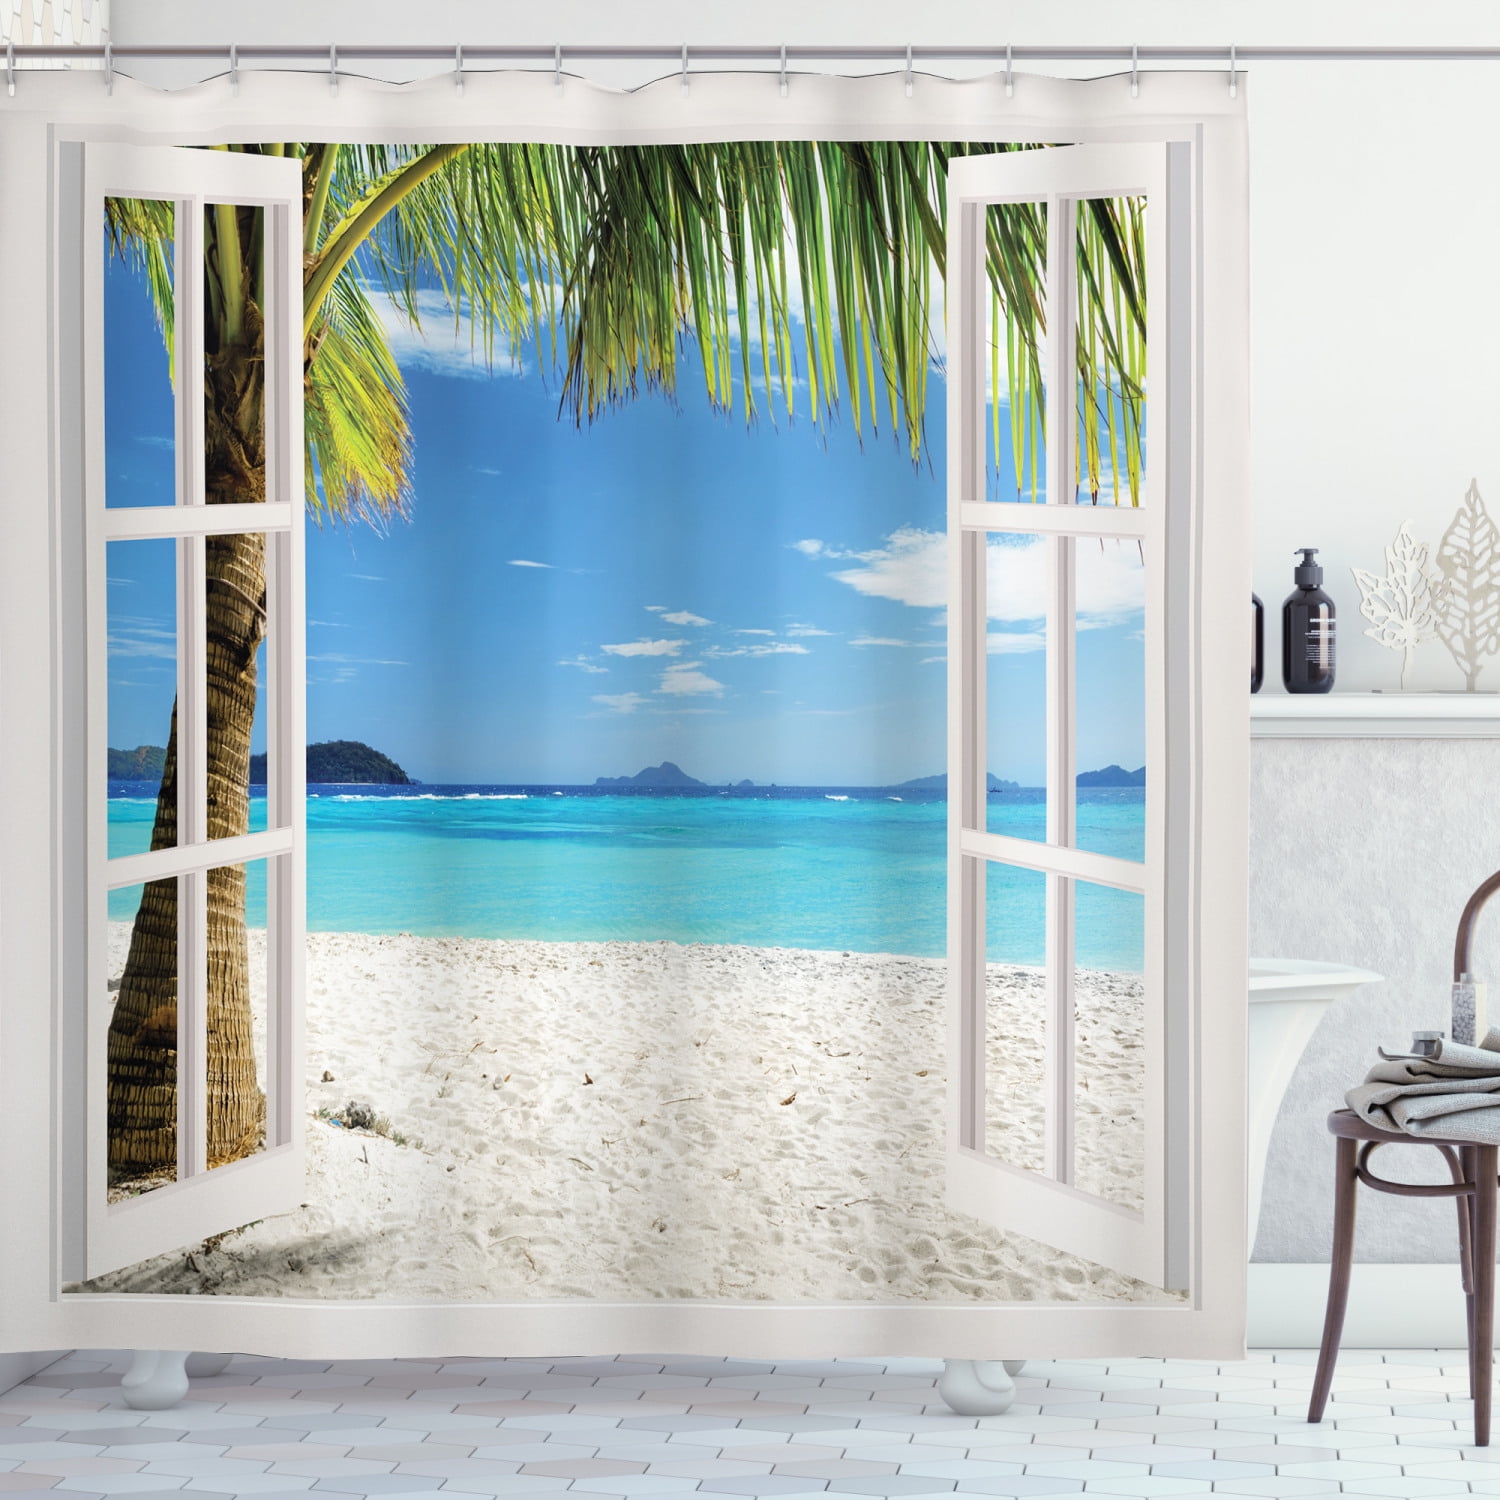 Window to Beach Fabric SHOWER CURTAIN w/Hooks Tropical Ocean Sand Palm Trees 